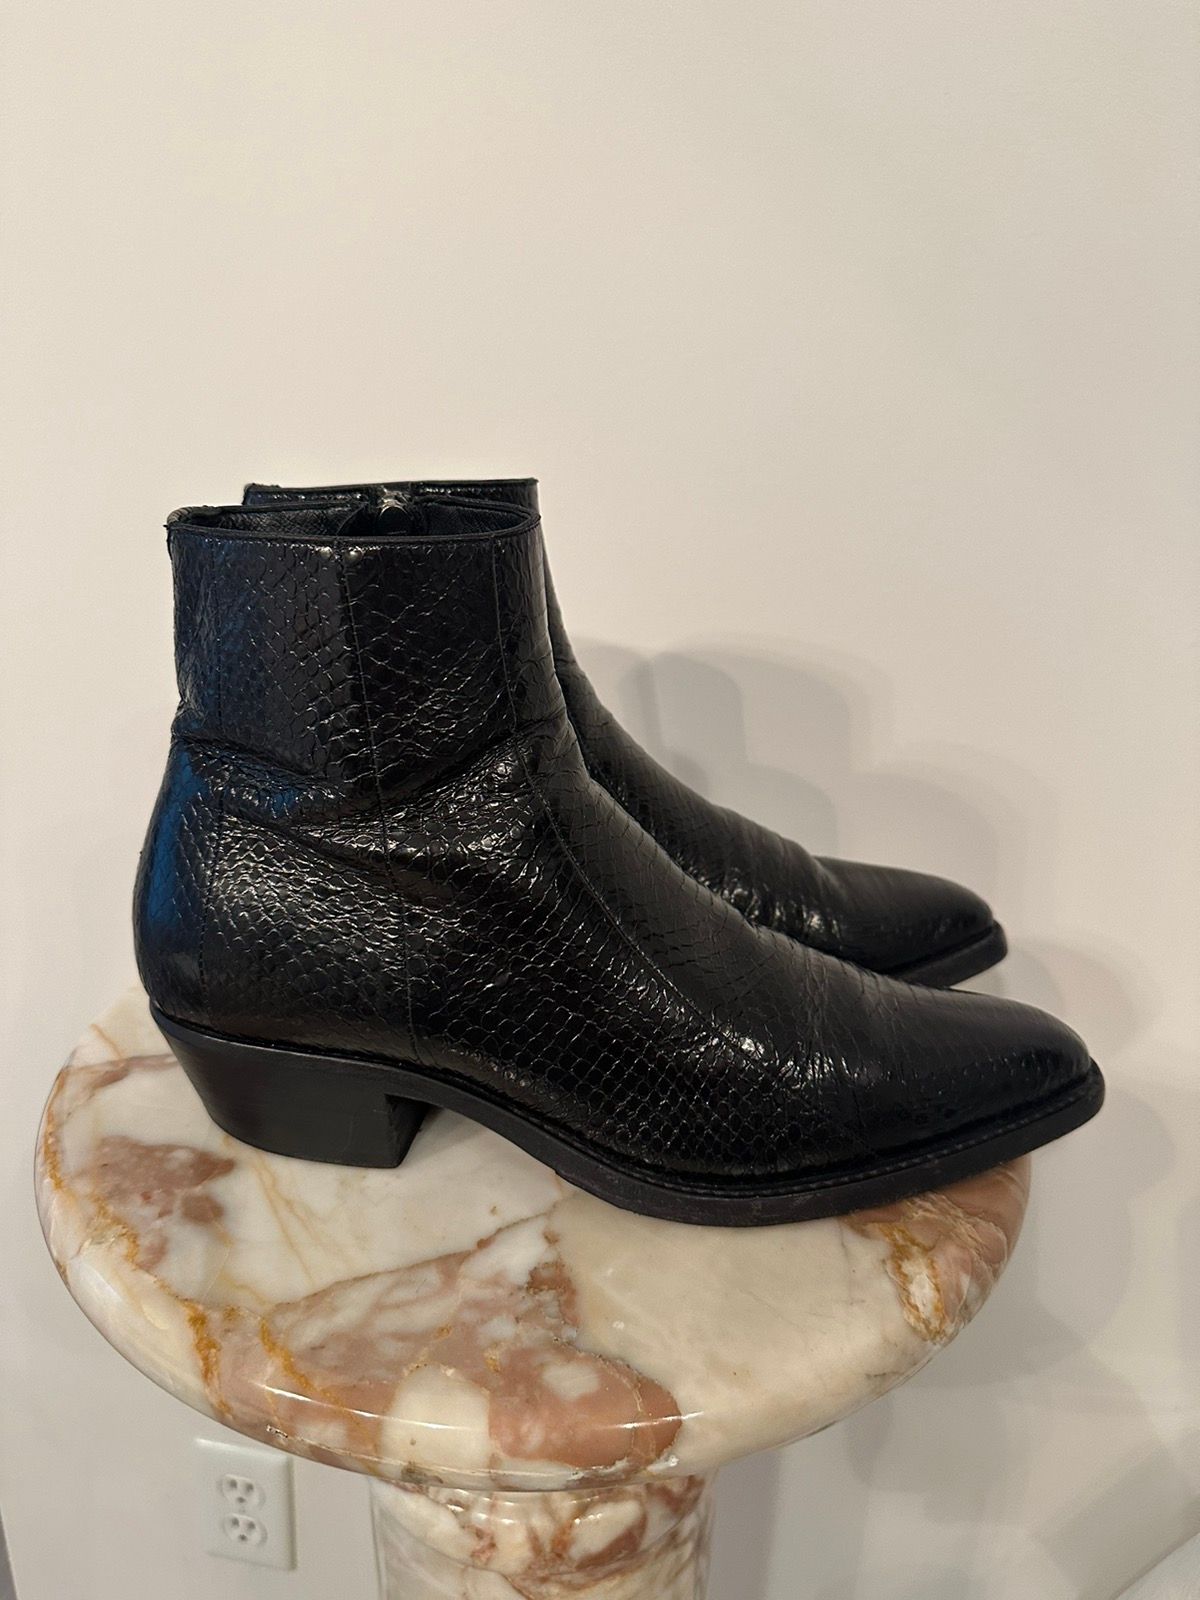 Ysl Rive Gauche By Hedi Slimane YSL Snake Skin Boots Size US 10 / EU 43 - 1 Preview